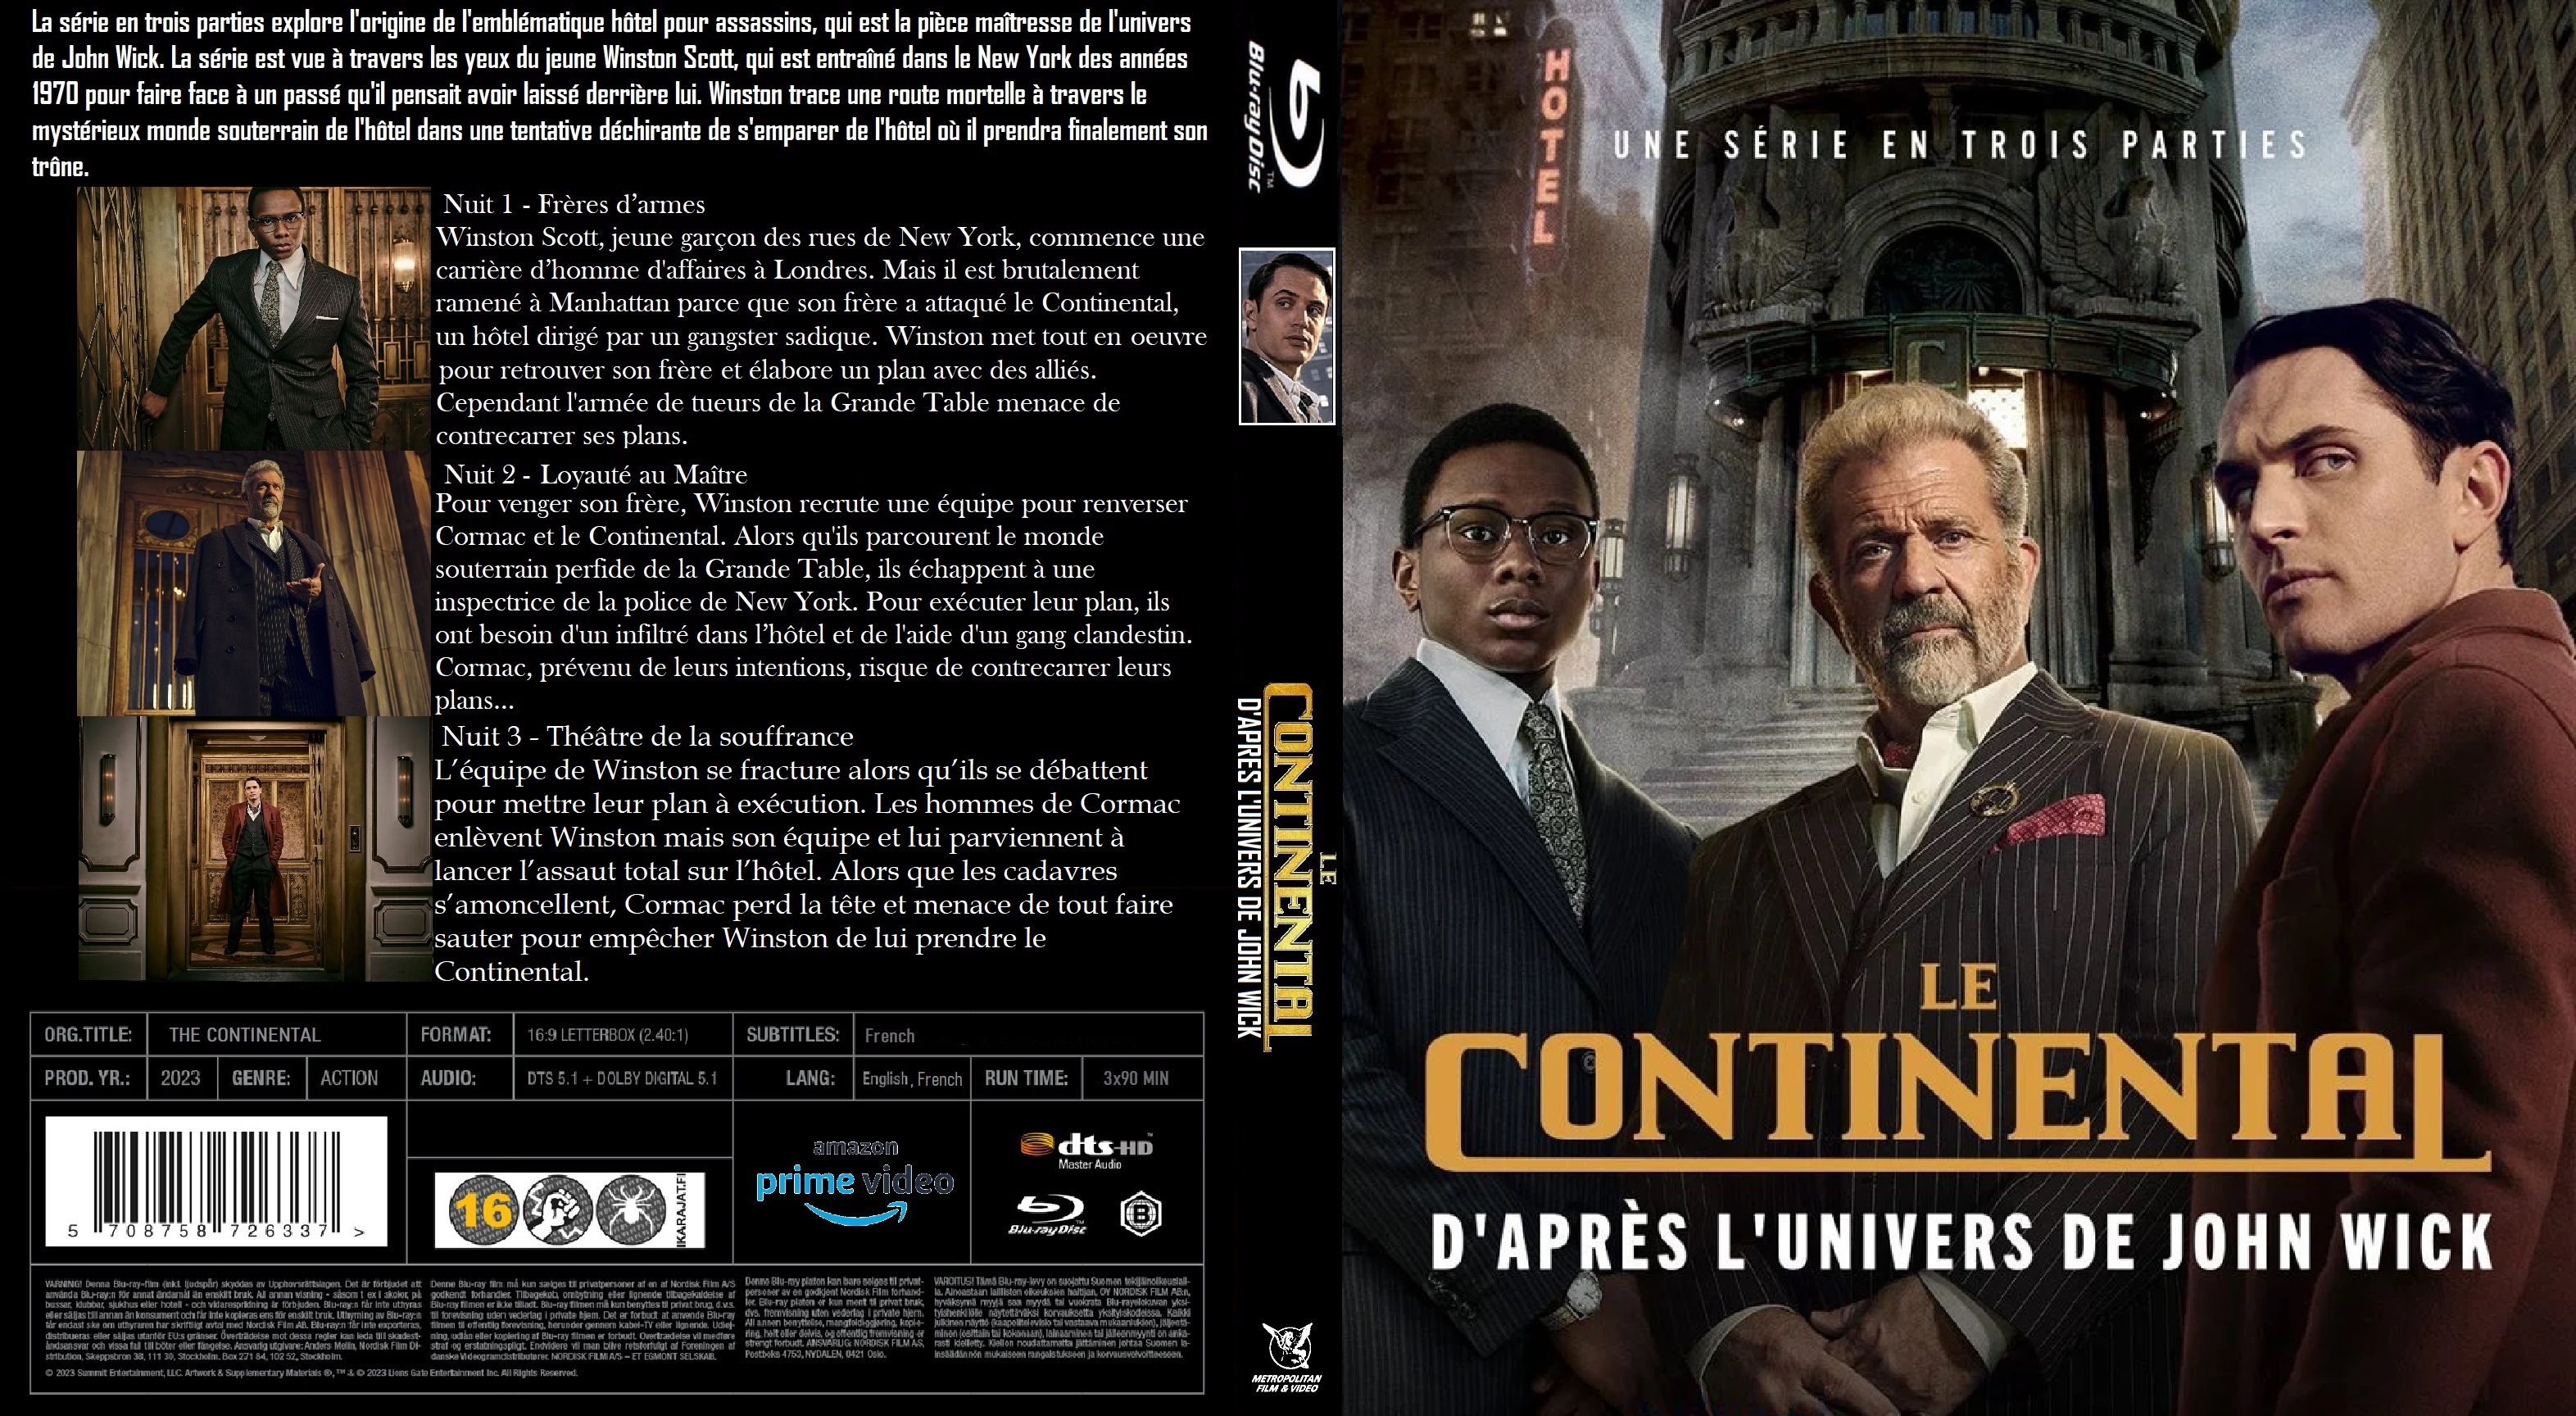 Jaquette DVD Le Continental saison 1 custom (BLU-RAY) v2